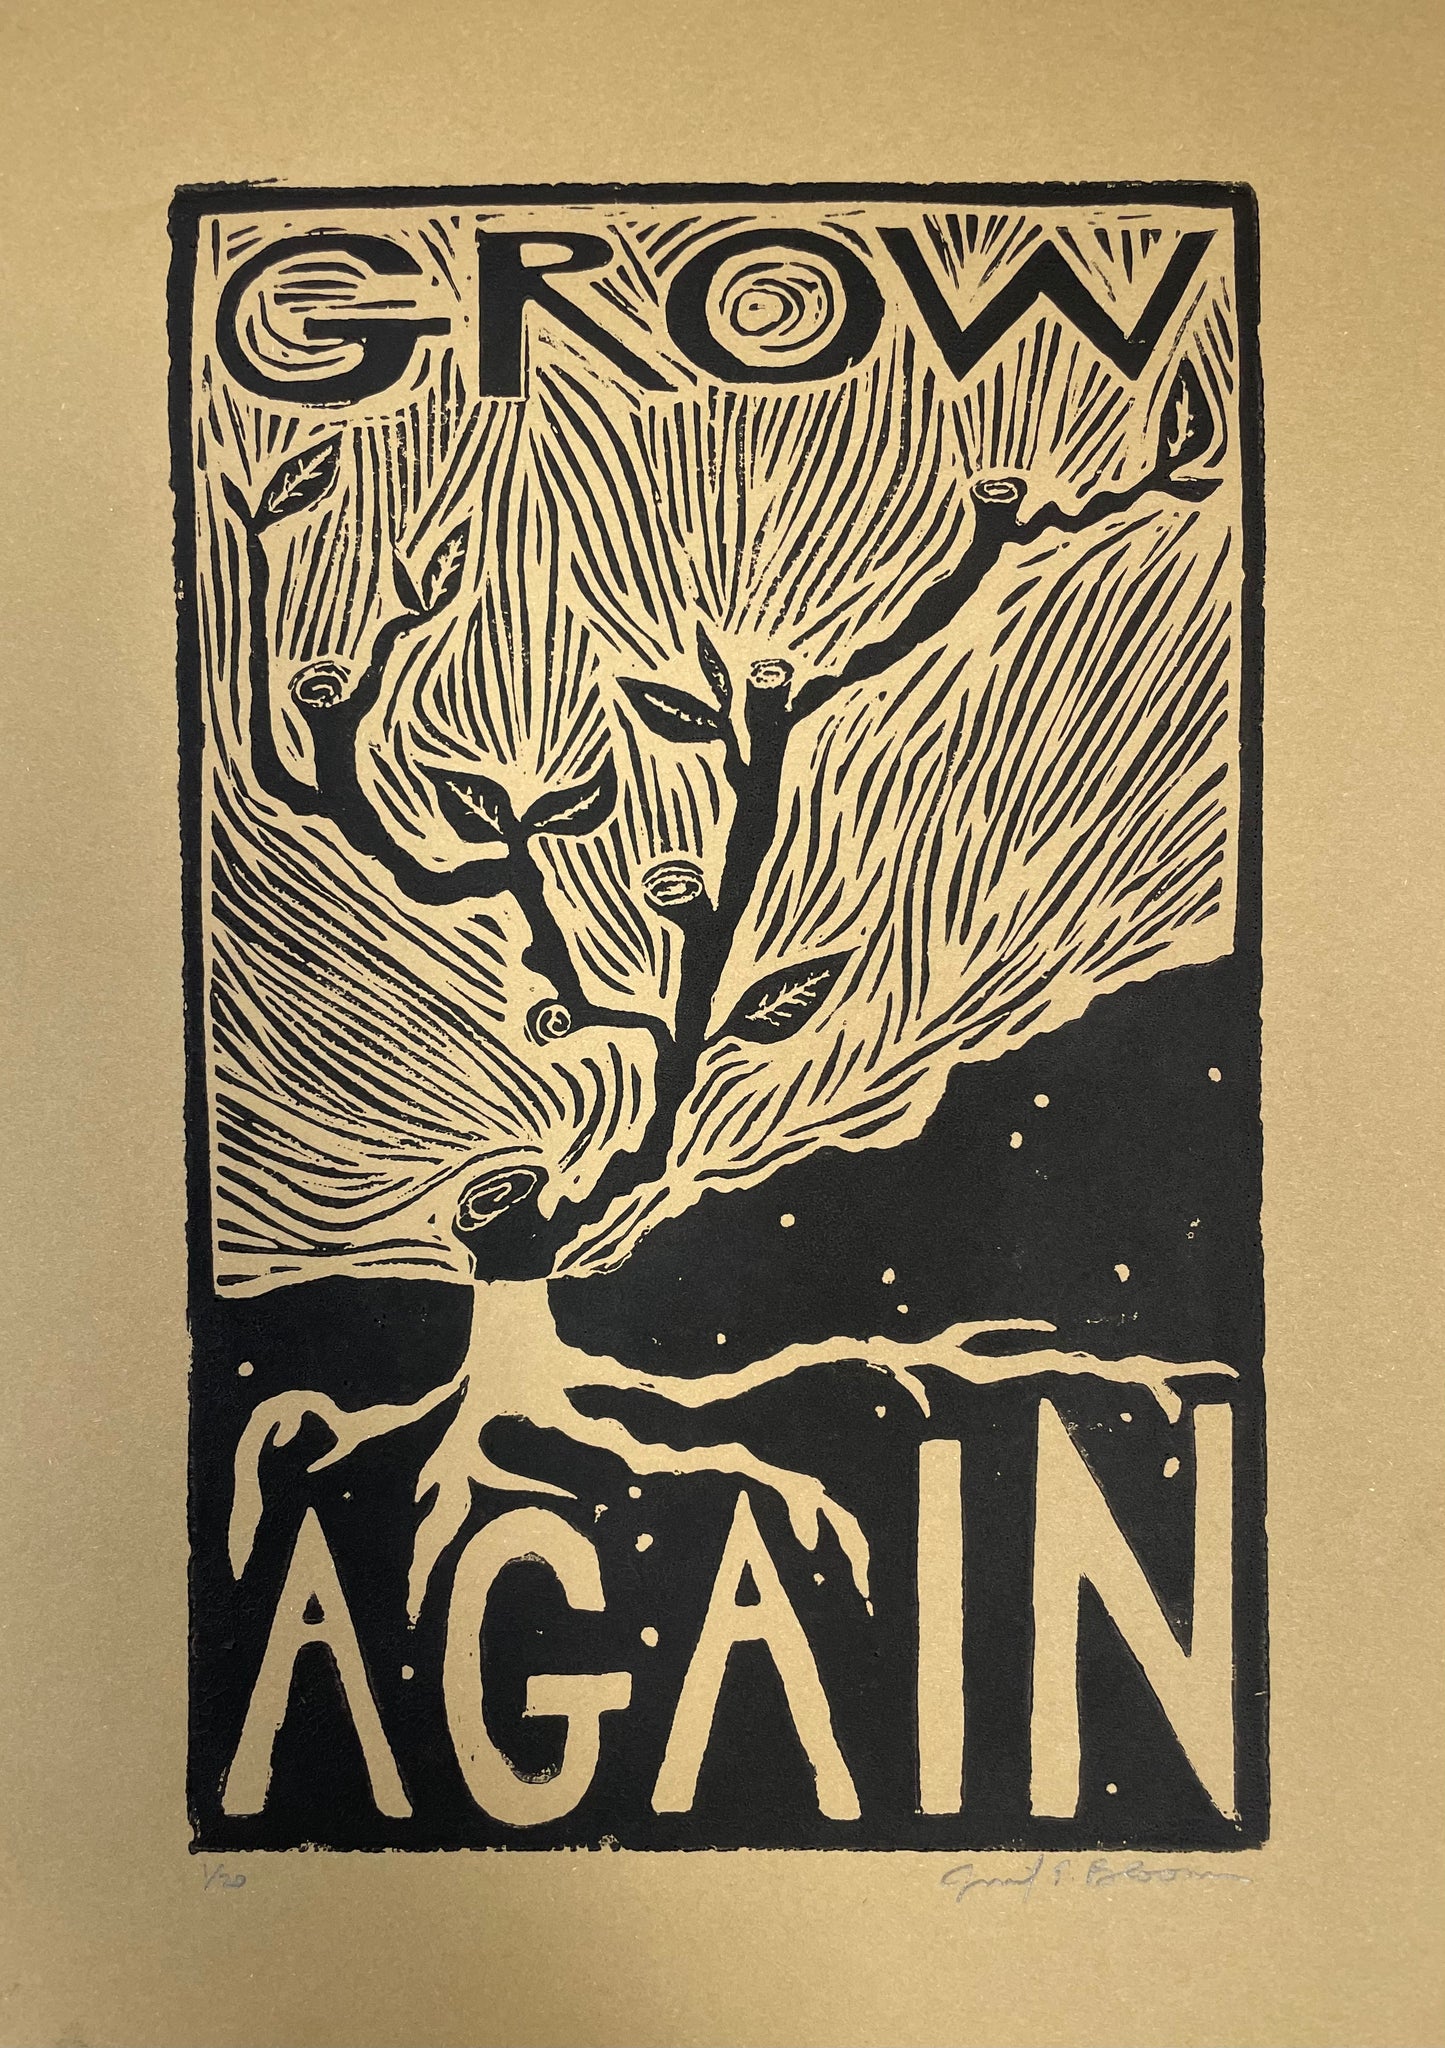 Hand Printed Linoprint | Grow Again